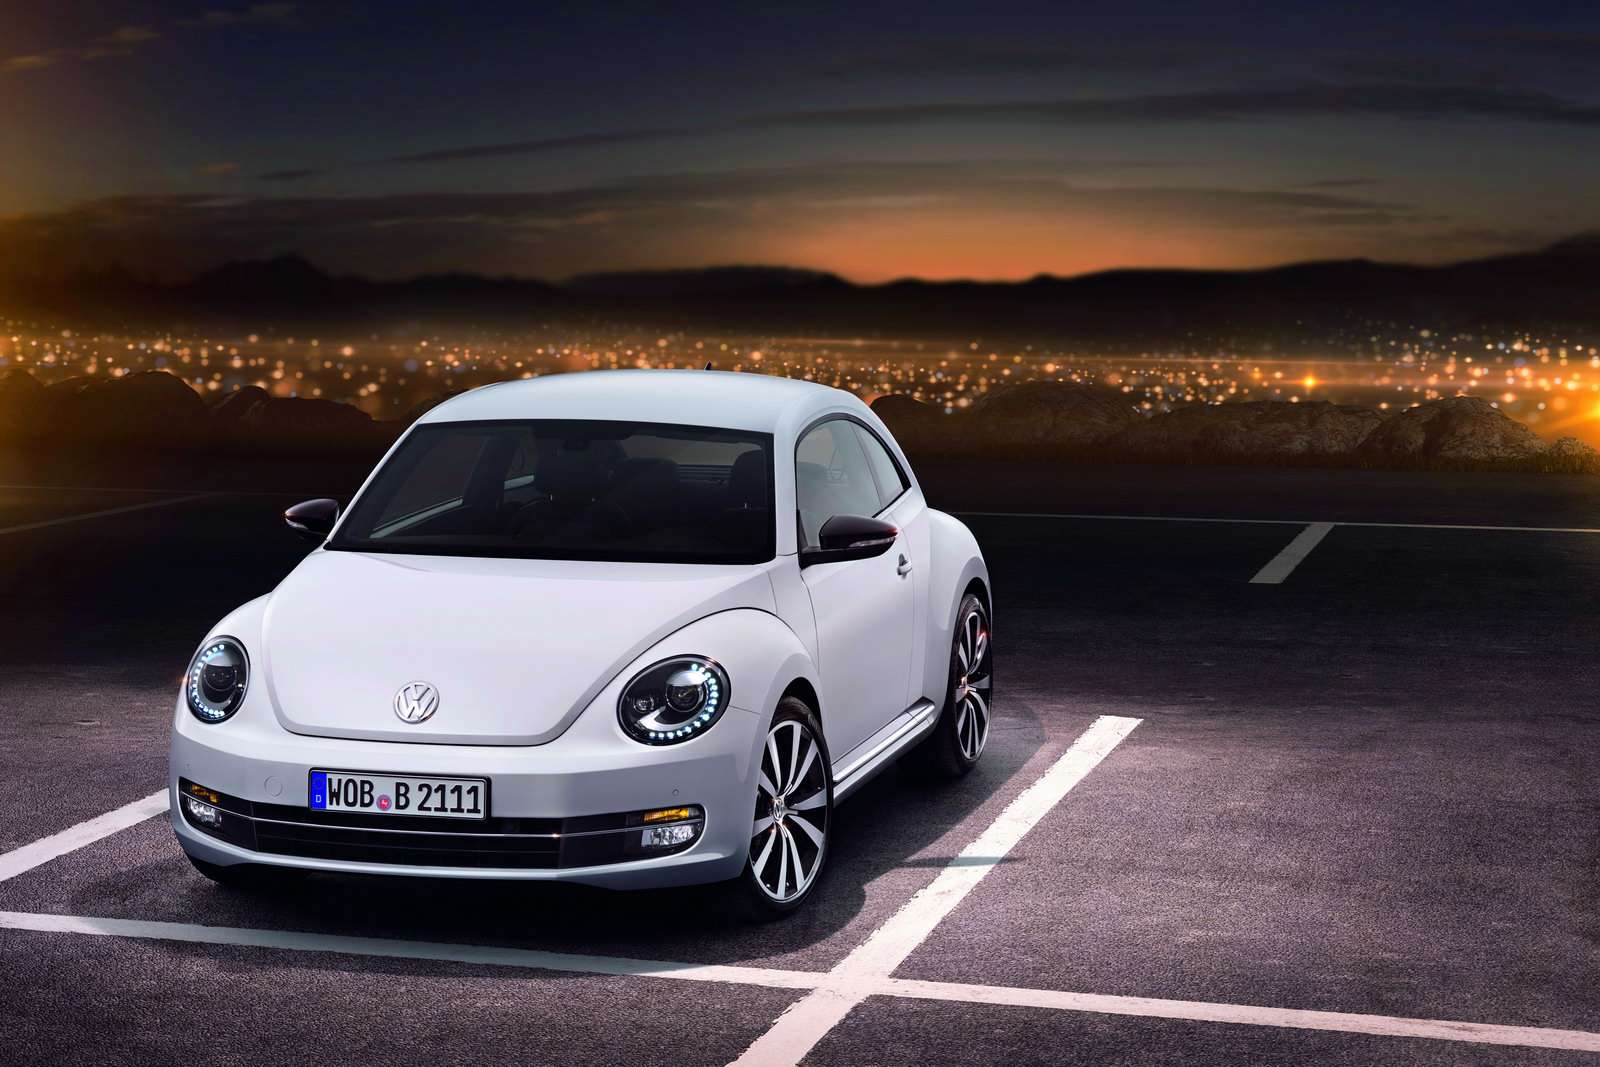 VW Nev Beetle oficjalnie kwiecien 2011